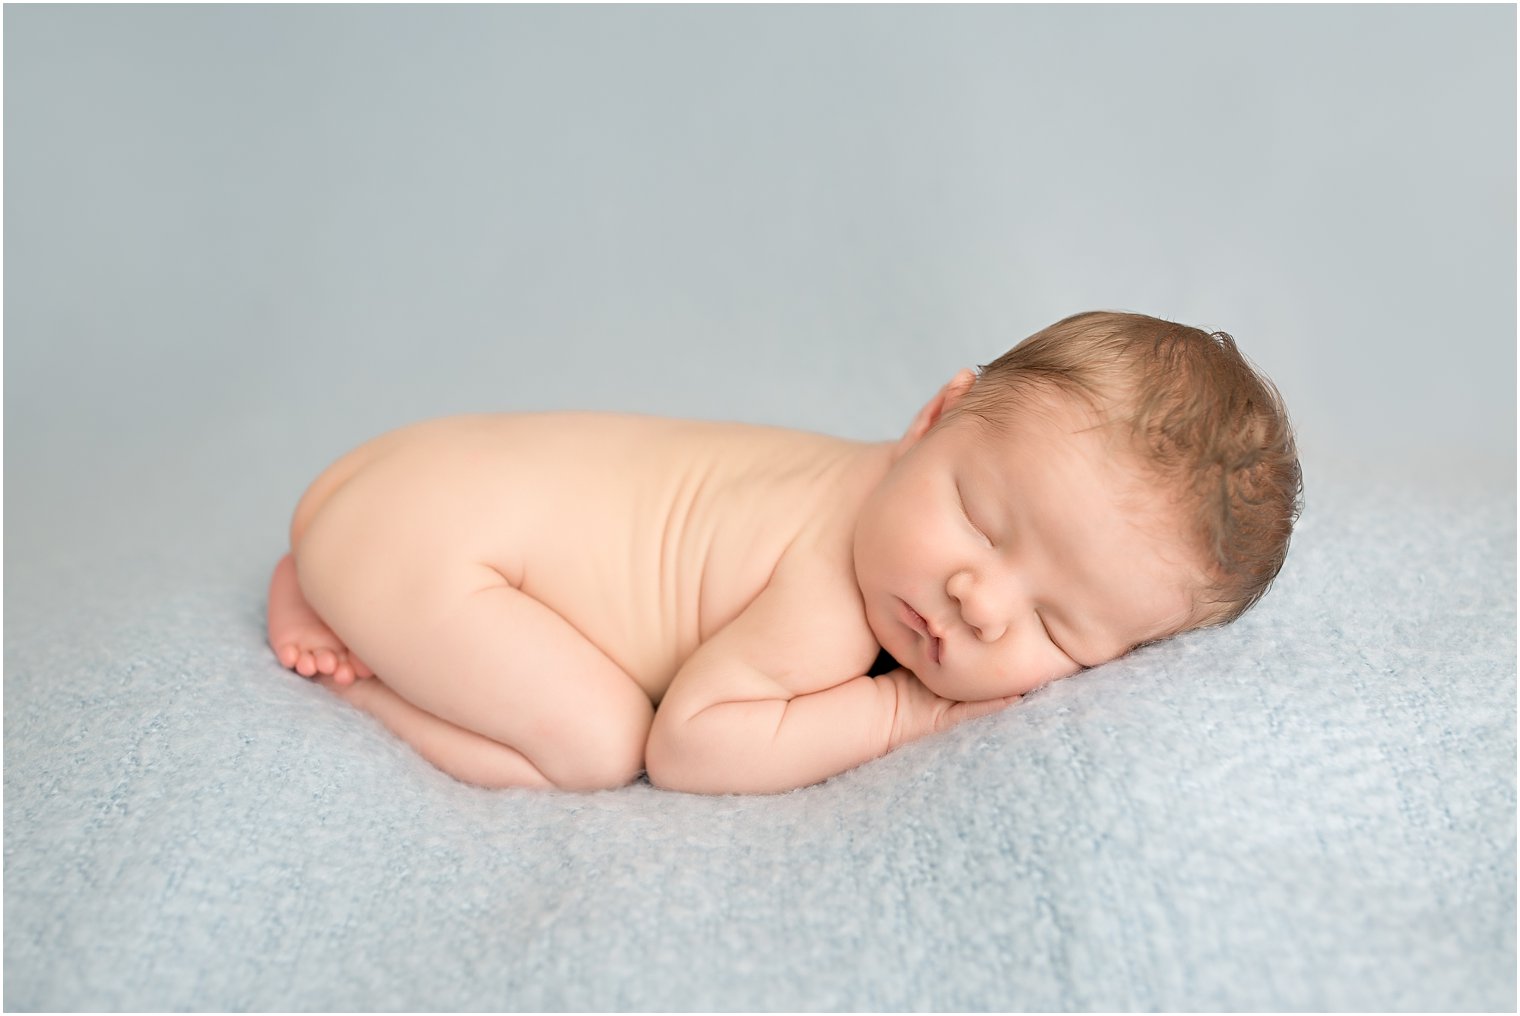 Newborn boy on soft blue blanket